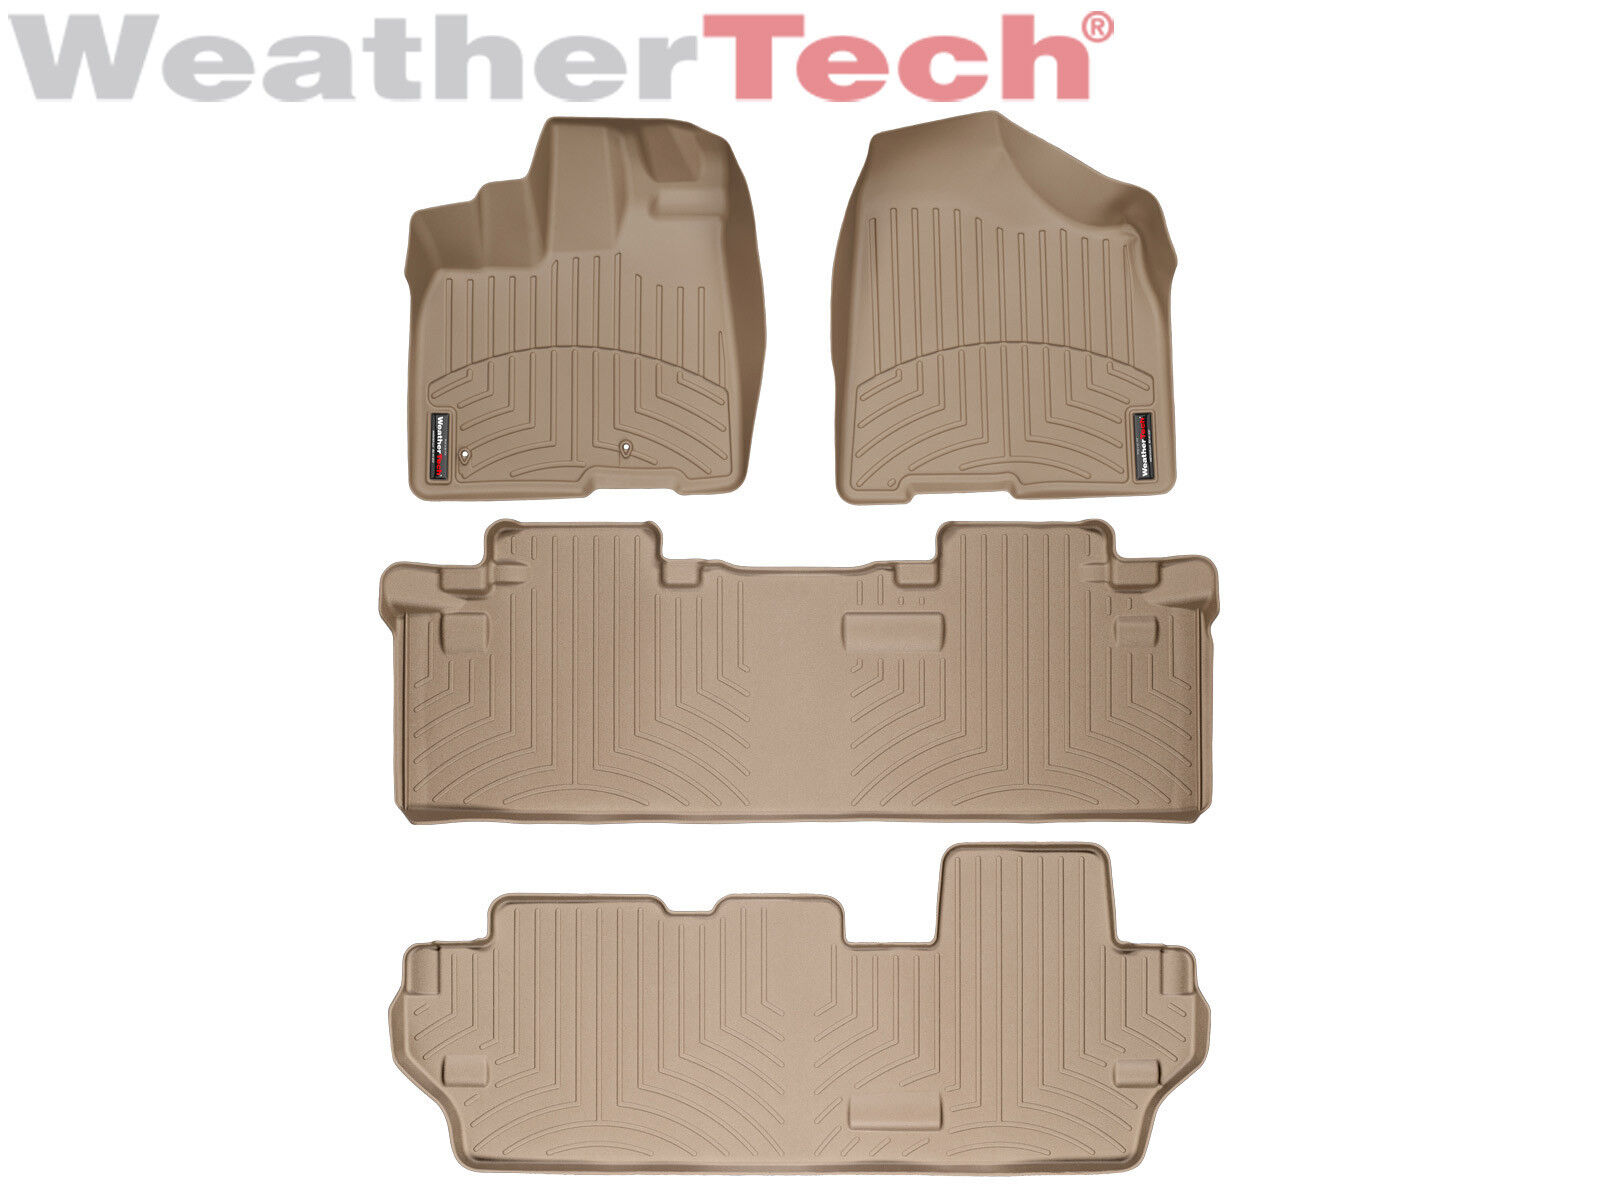 WeatherTech DigitalFit FloorLiner for Toyota Sienna-8 Passenger- 2011-2012 - Tan